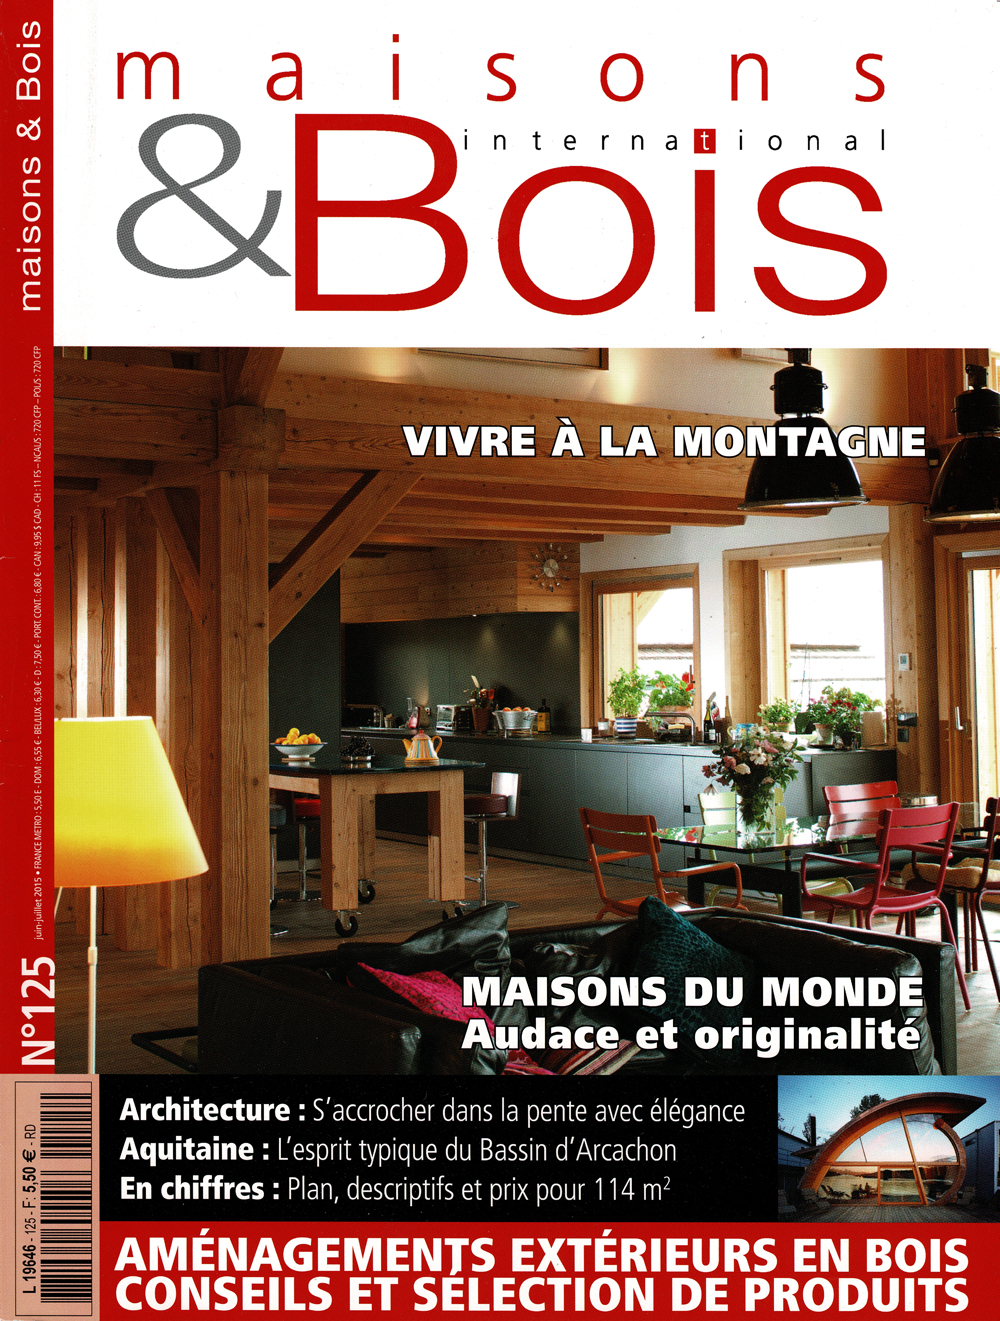 Maisons & Bois International, June/July 2015, Sycamore House